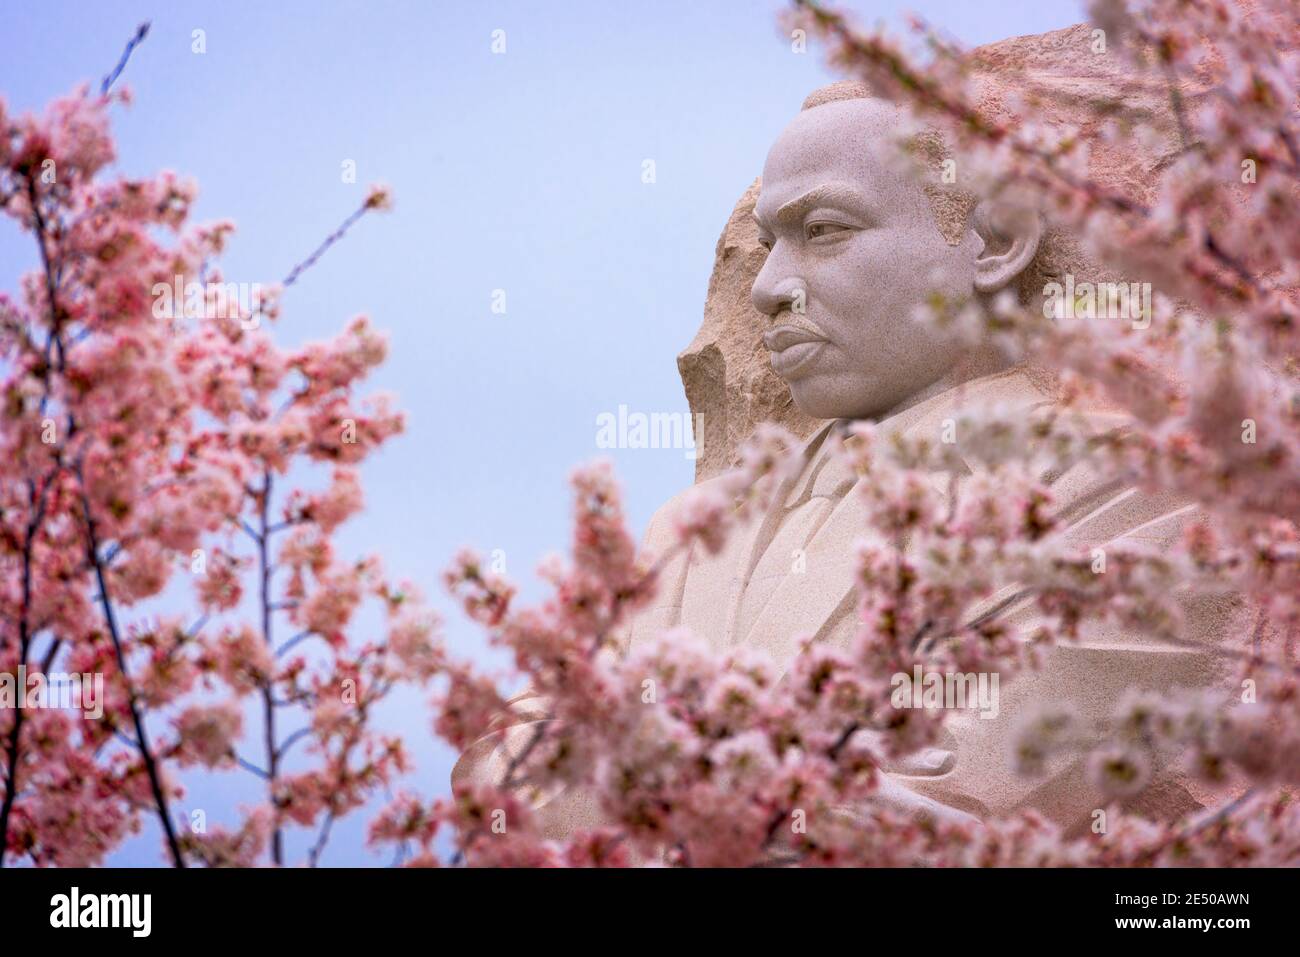 WASHINGTON - 8. APRIL 2015: Das Denkmal für den Bürgerrechtführer Martin Luther King, Jr. während der Frühjahrssaison im West Potomac Park. Stockfoto